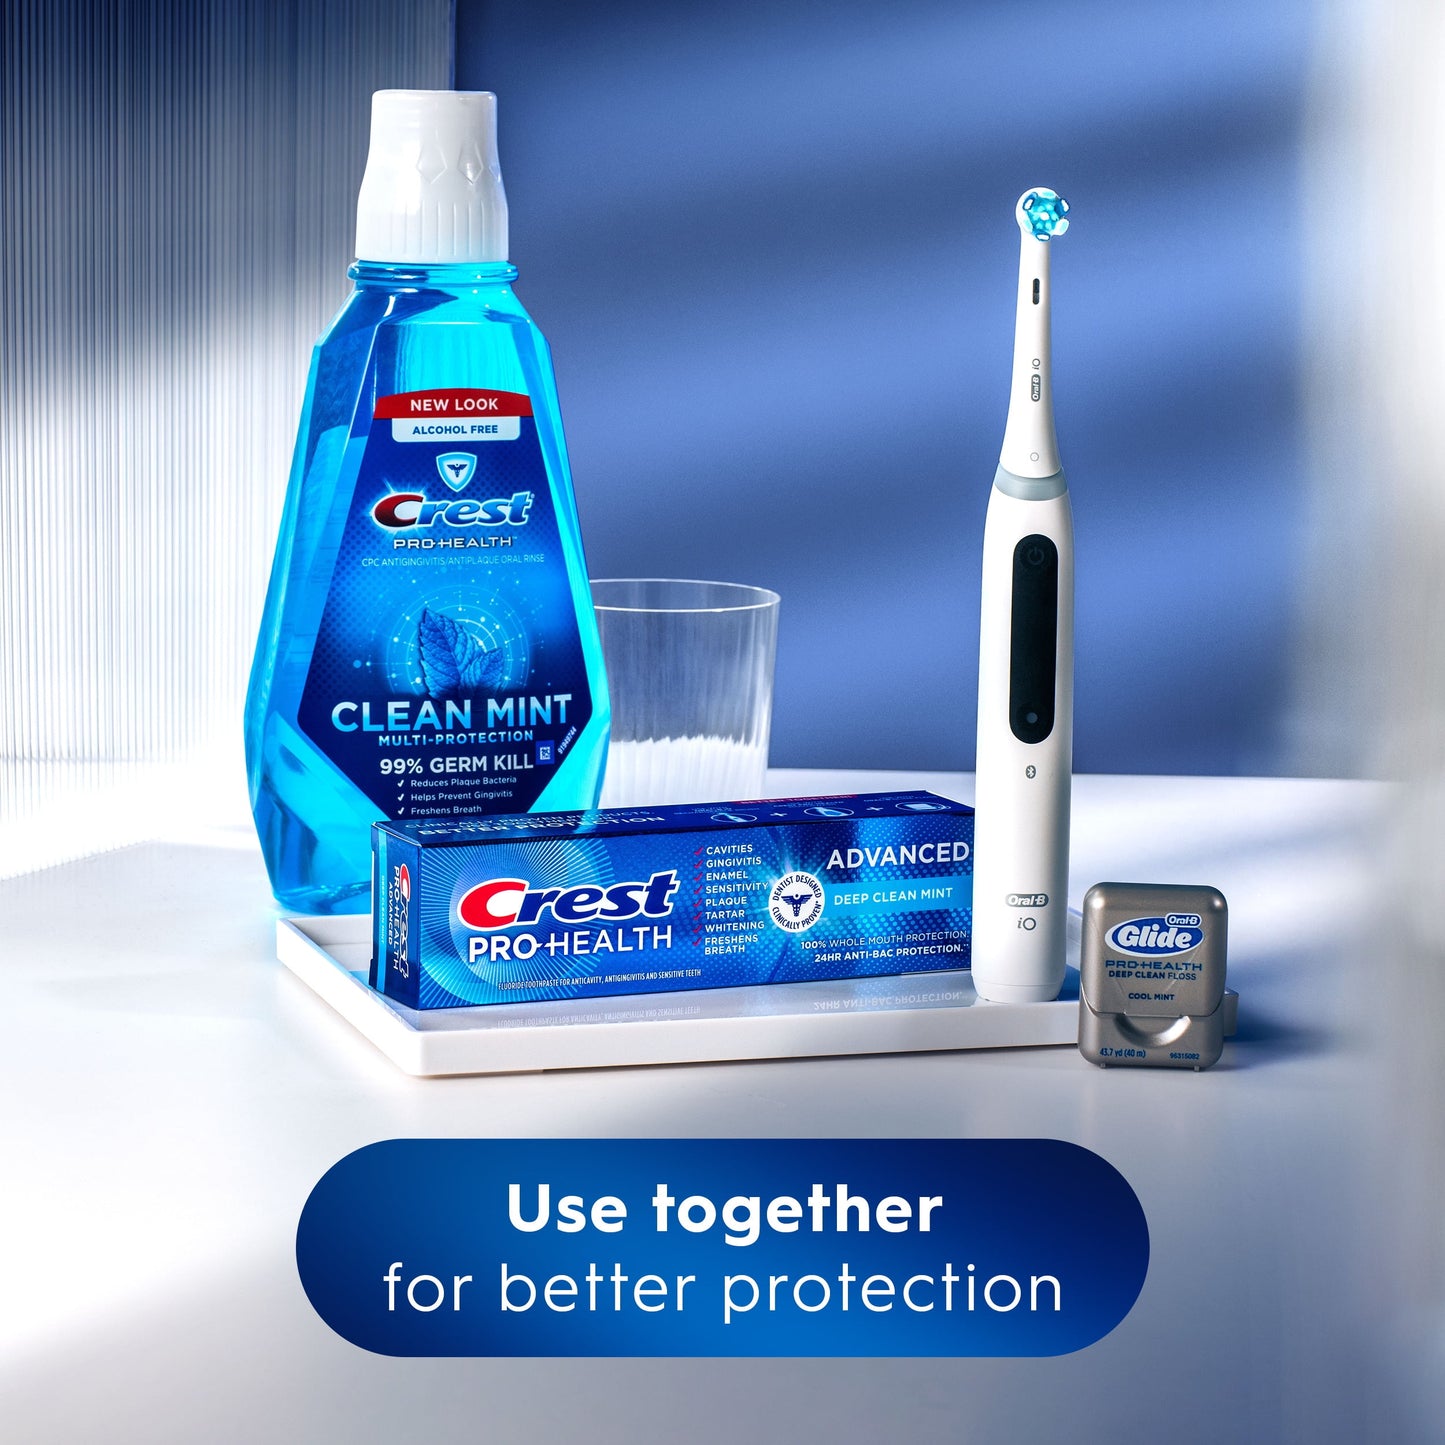 Crest Pro Health Advanced Deep Clean Mint Toothpaste, 5.1 oz